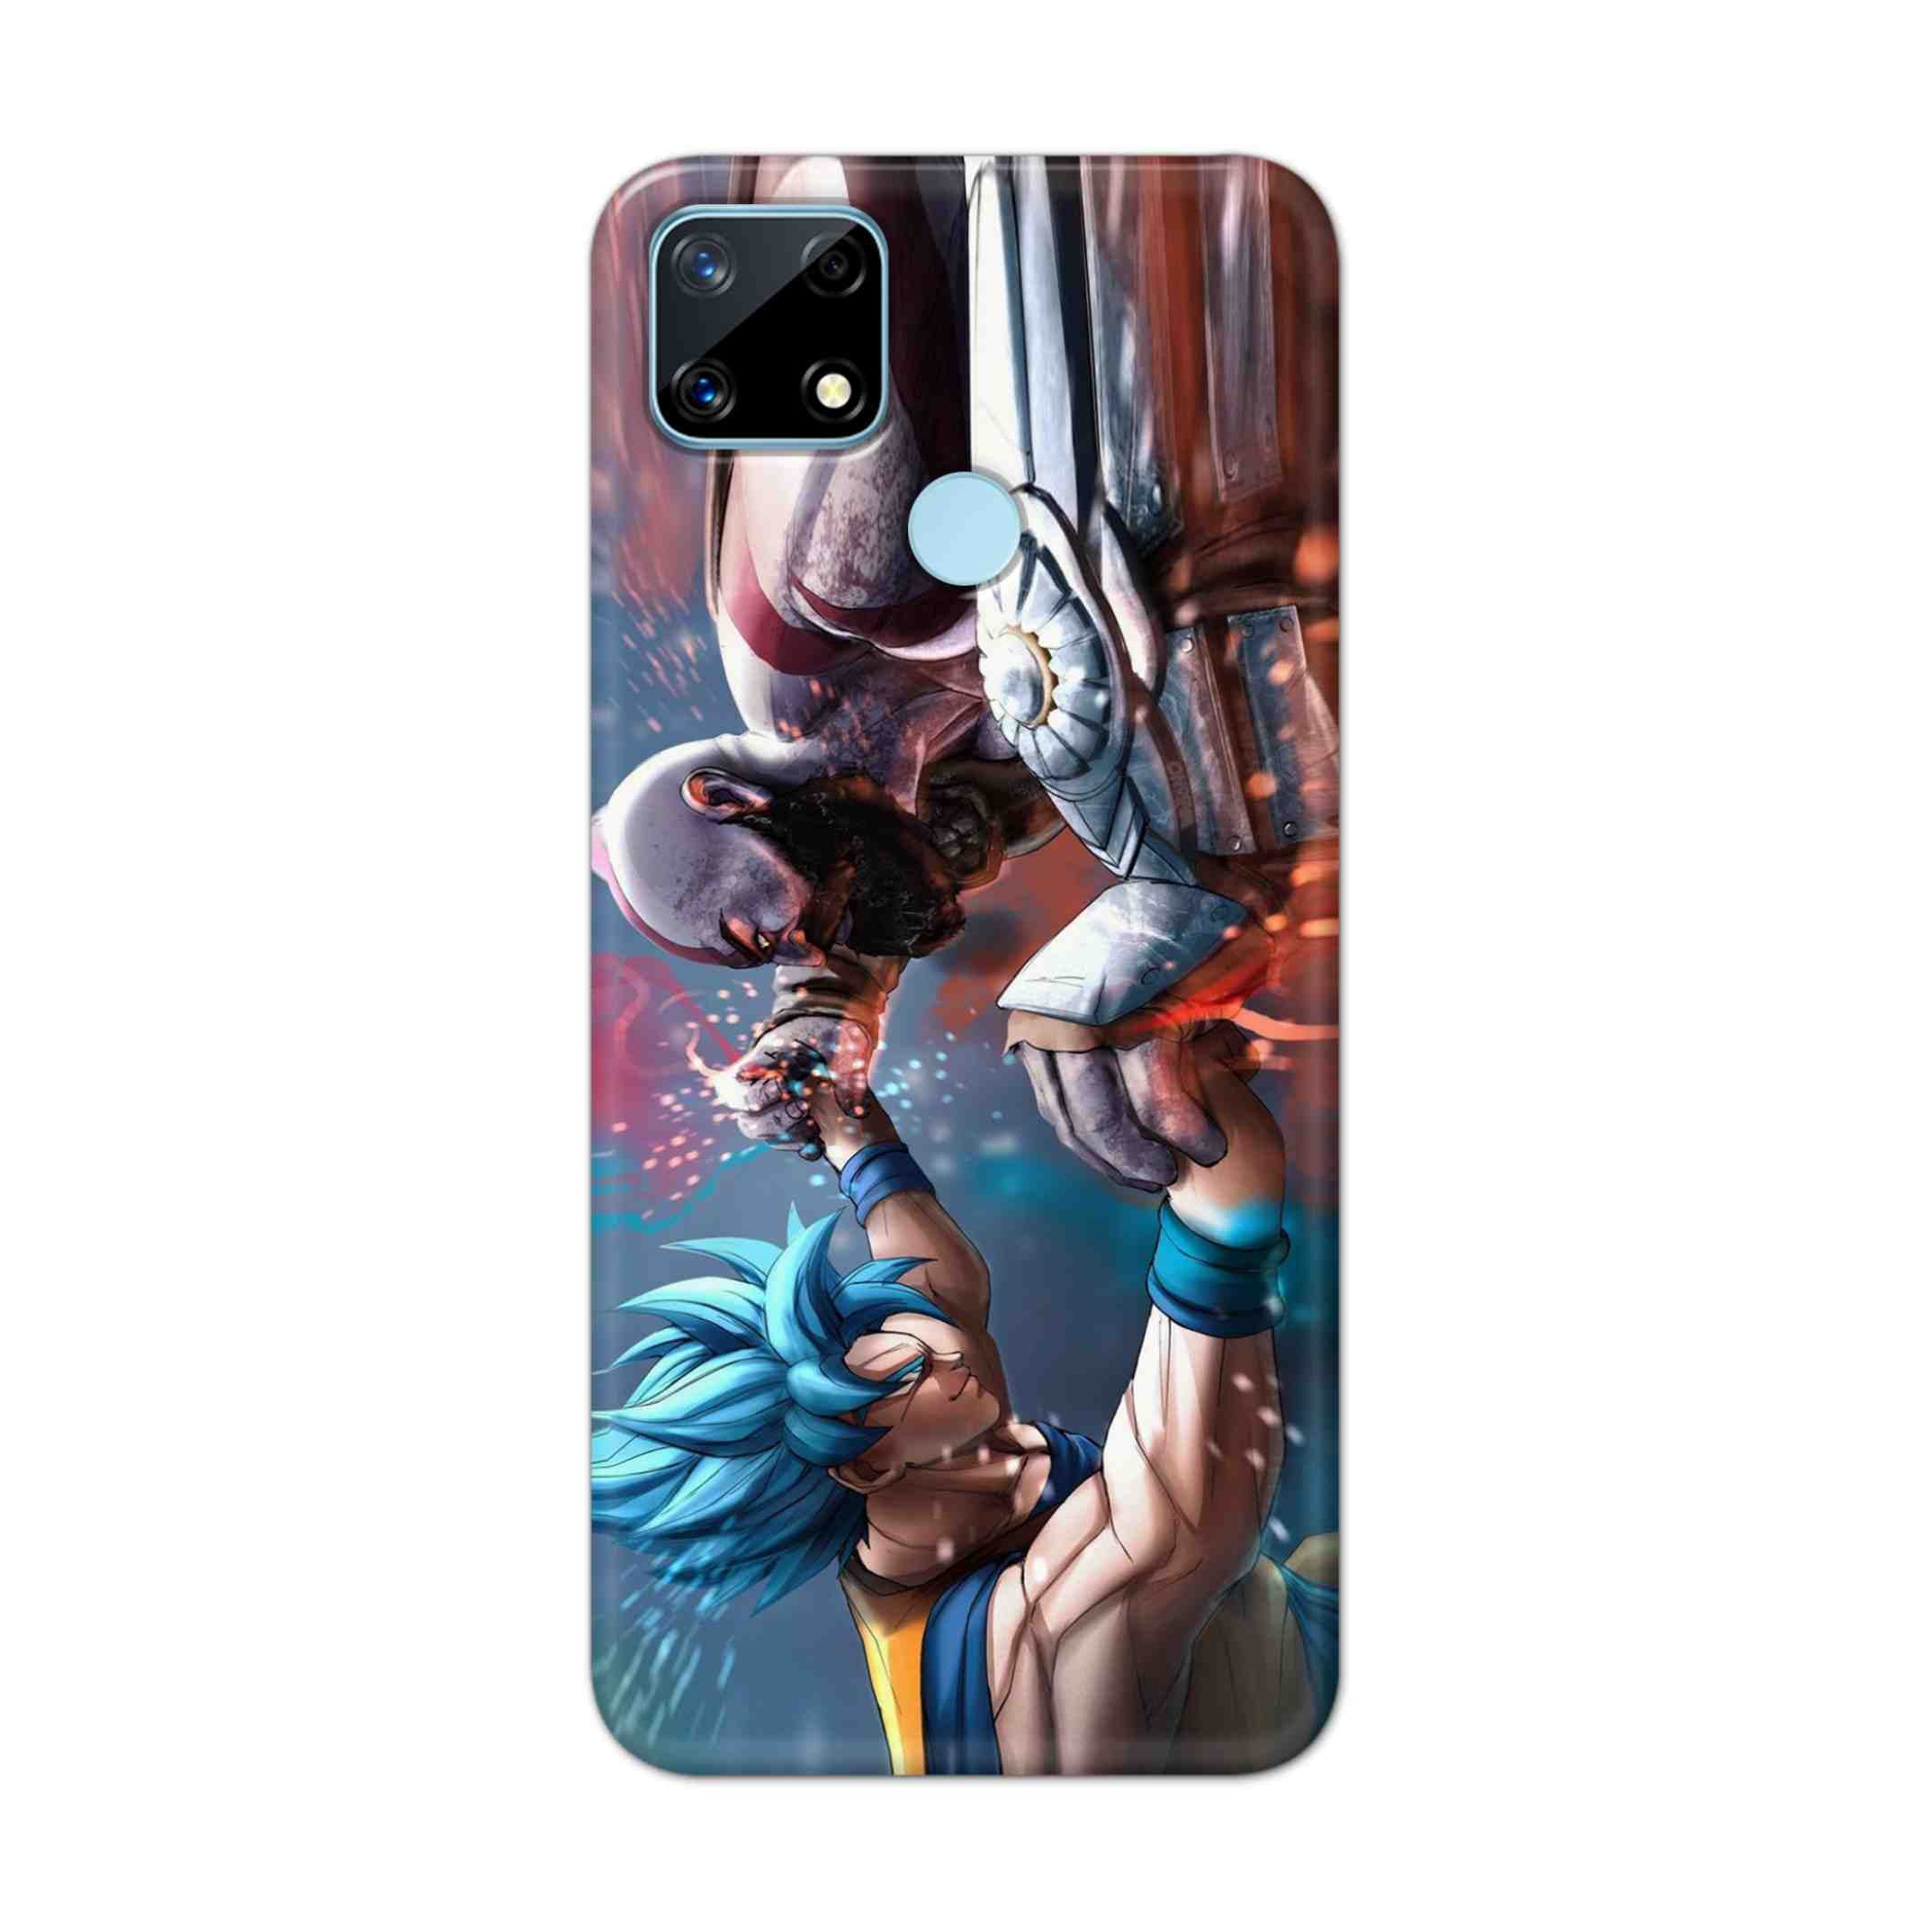 Buy Goku Vs Kratos Hard Back Mobile Phone Case Cover For Realme Narzo 20 Online